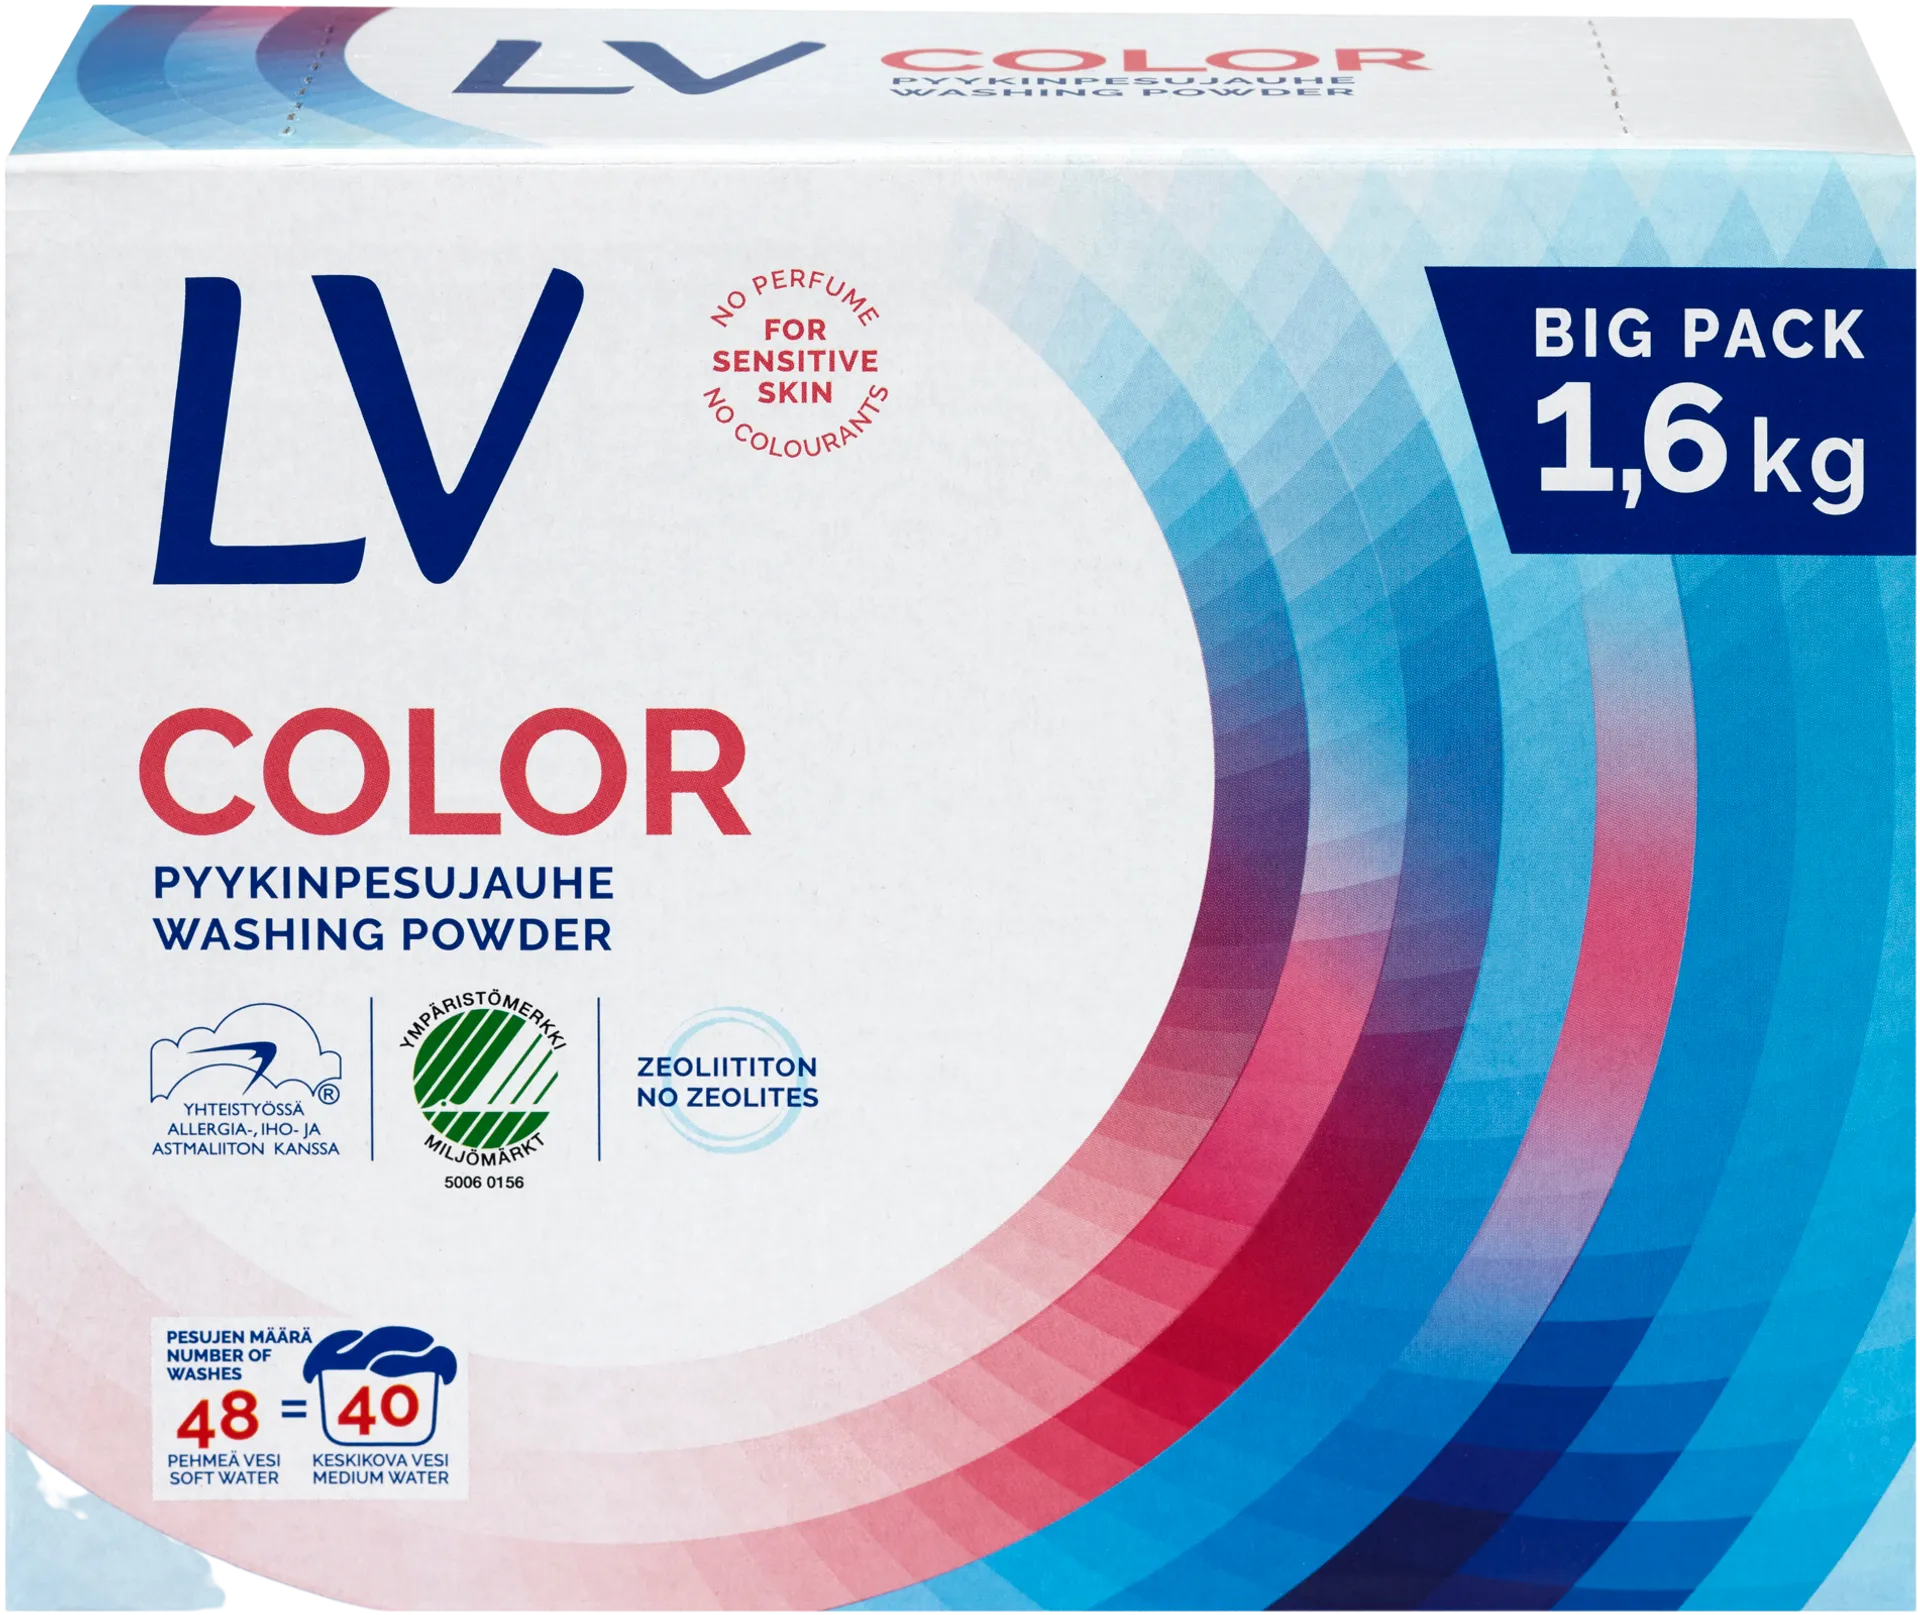 LV 1,6kg Color pyykinpesujauhetiiviste